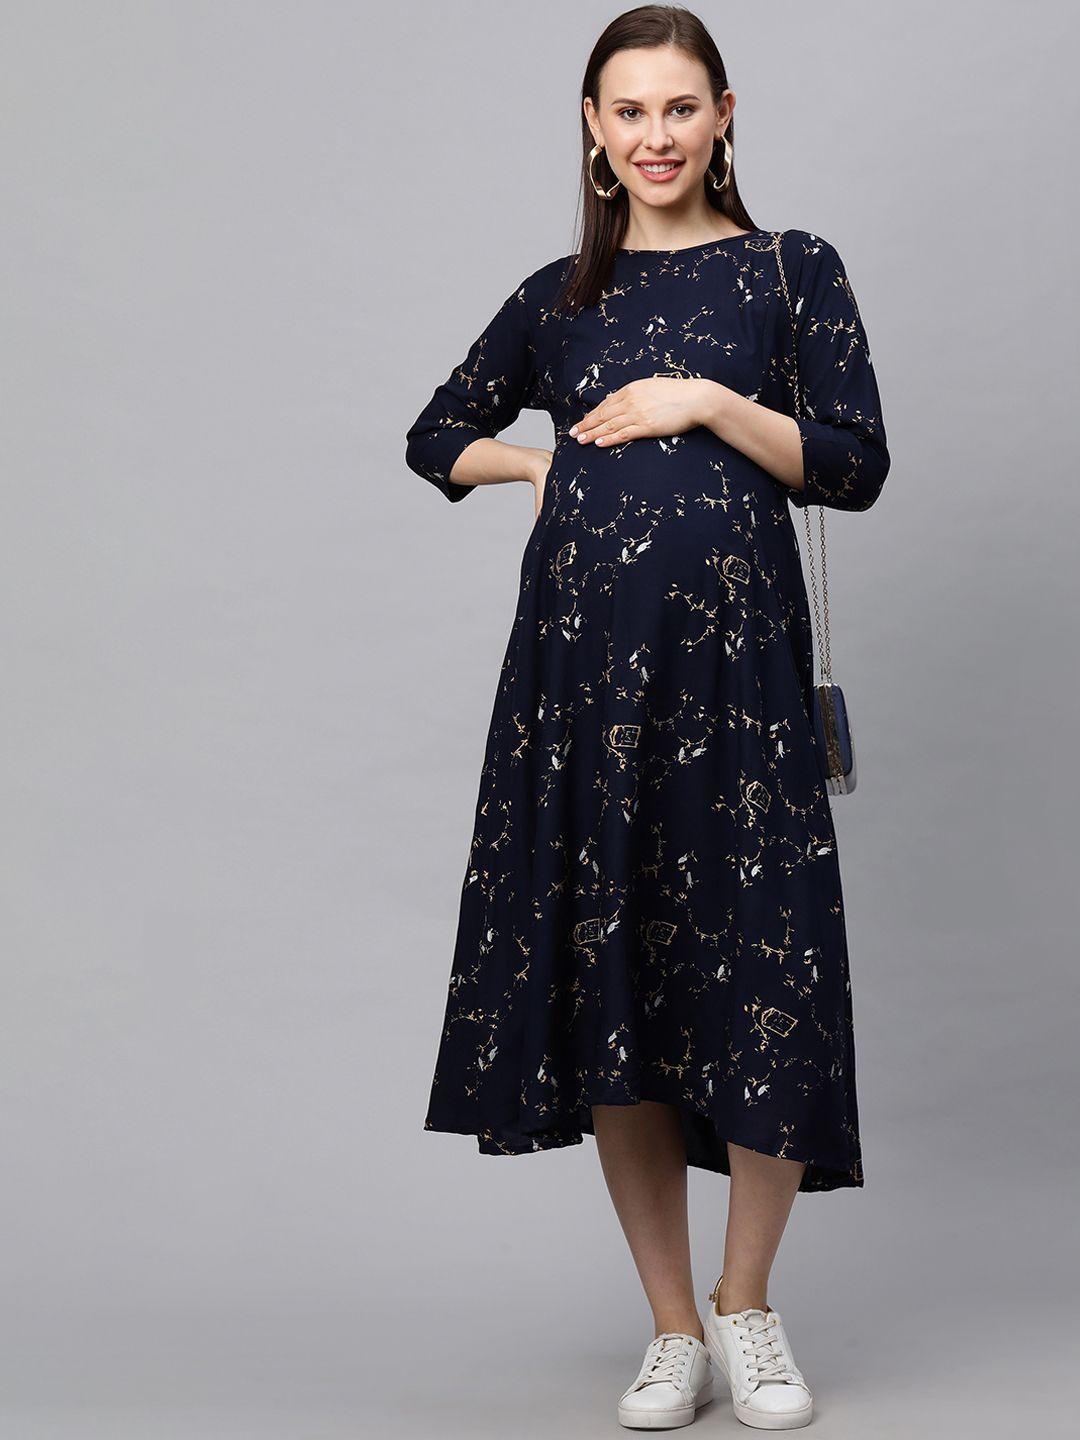 momtobe women navy blue printed maternity dress